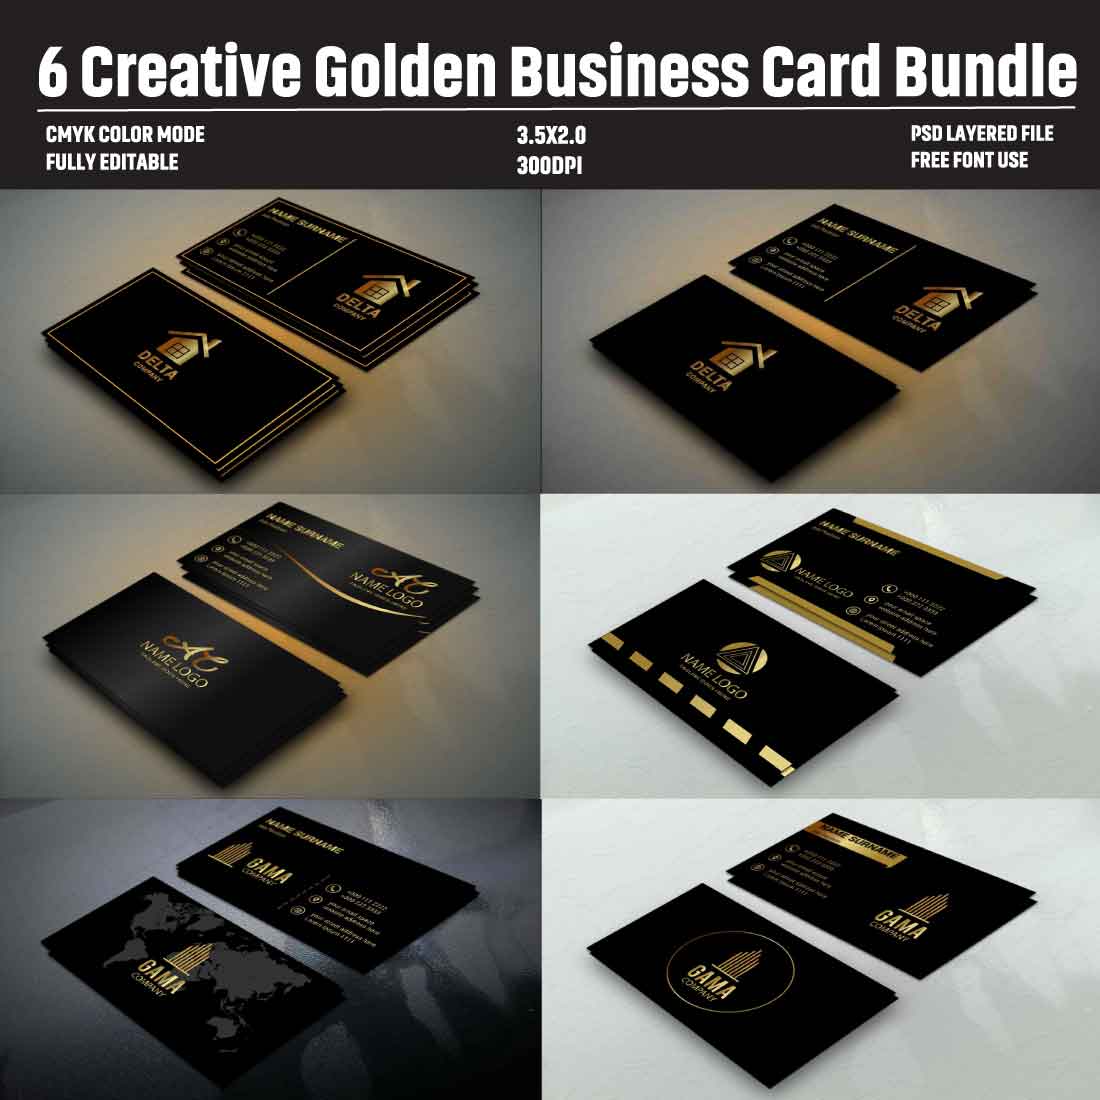 6 Creative Golden Business Card Bundle cover image.